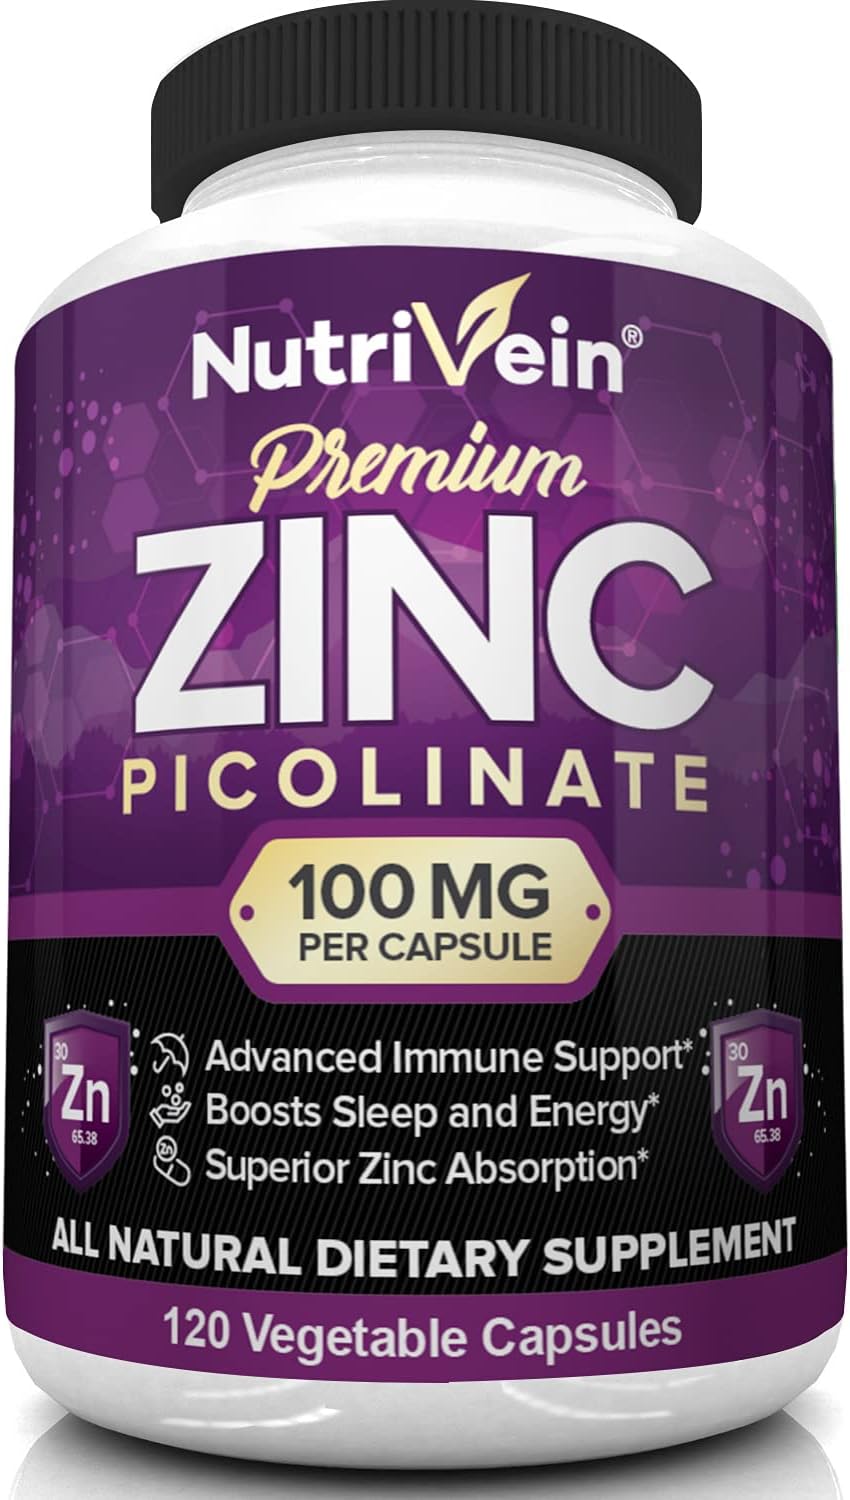 Premium Zinc Picolinate 100mg Supports Respiratory